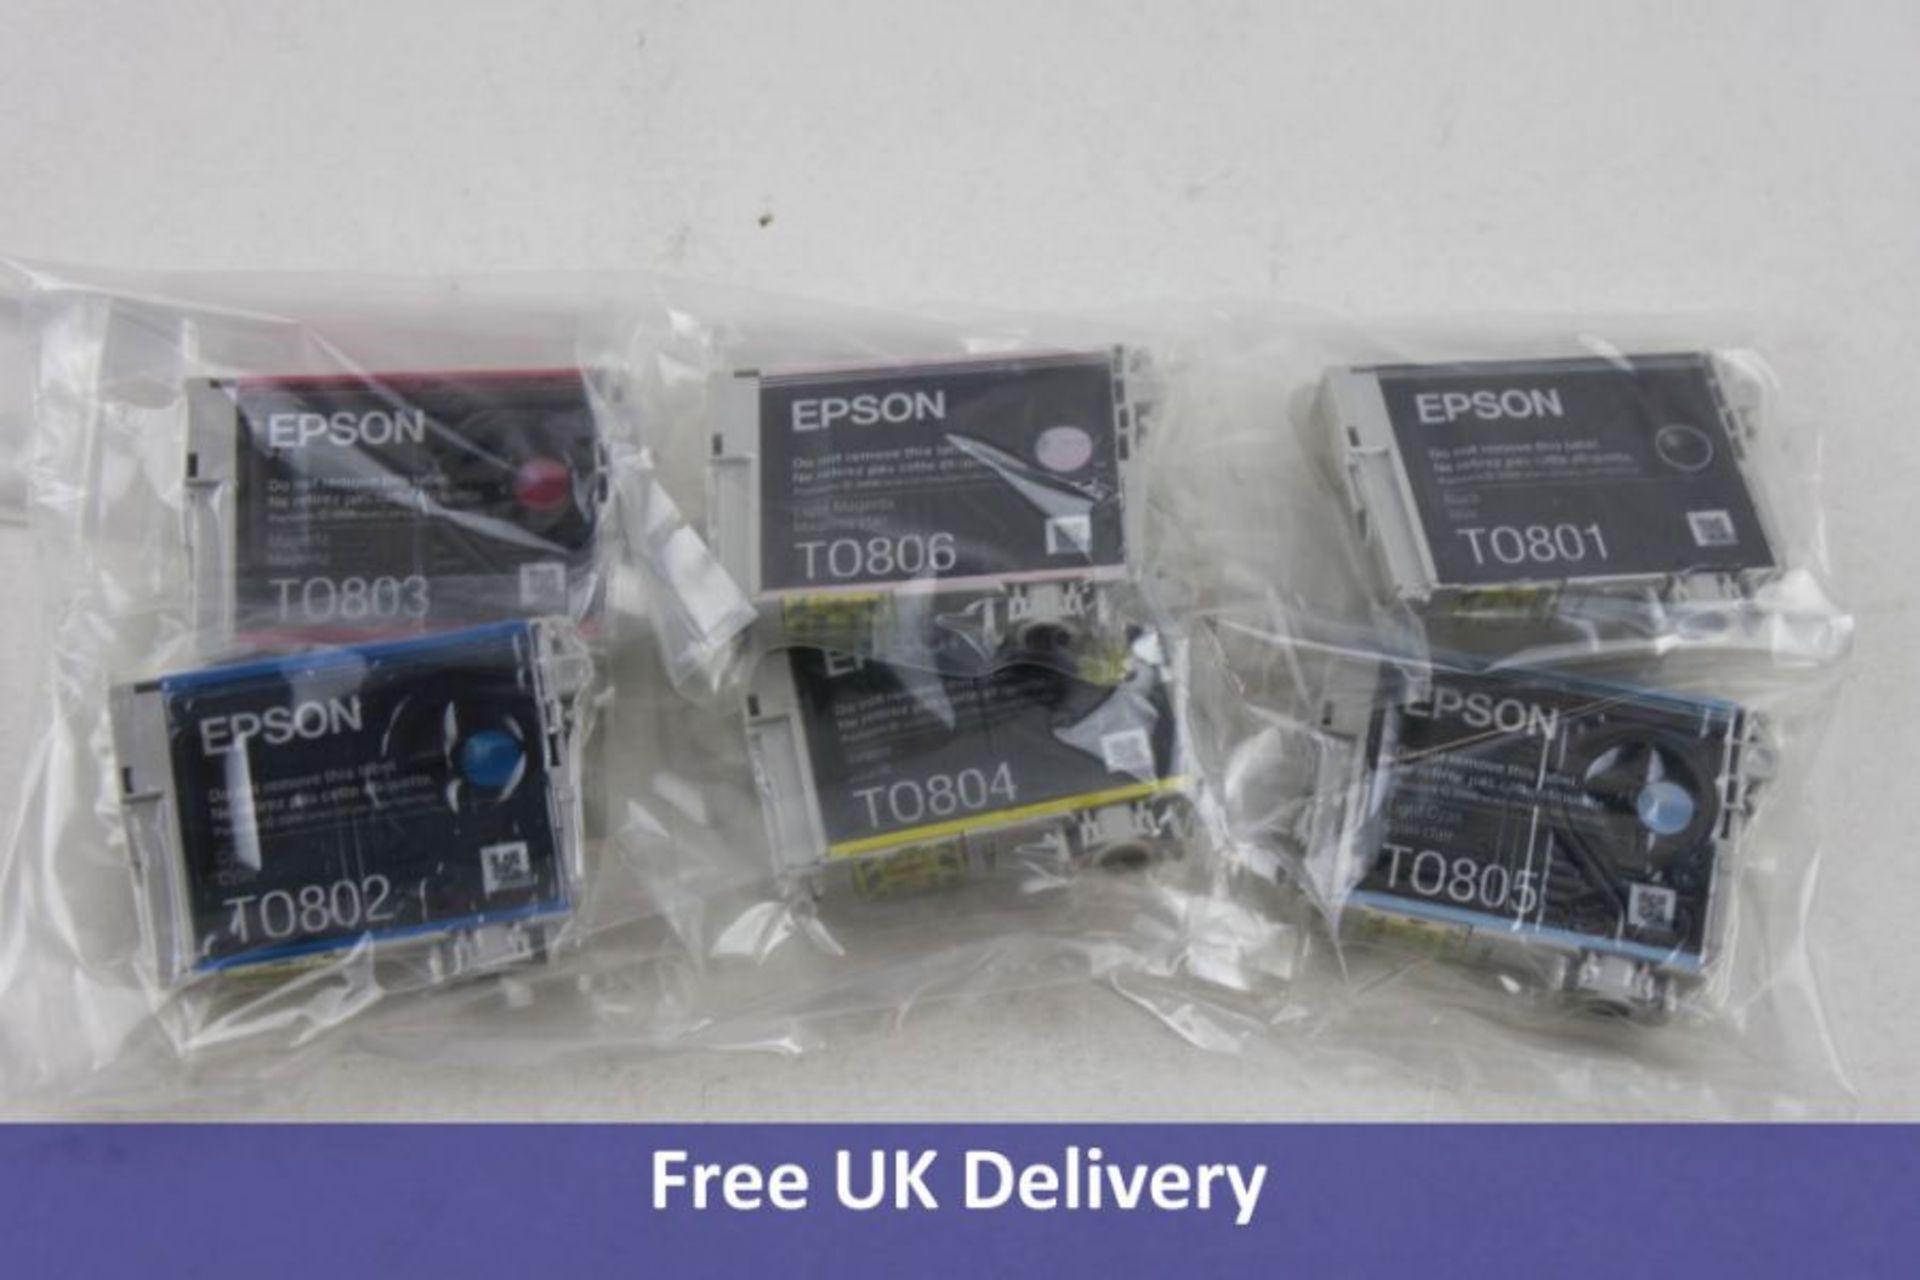 Six Epson Ink Cartridges to include 1x Black T0801, 1x Blue T0802, 1x Yellow T0804, 1x Light Cyan T0